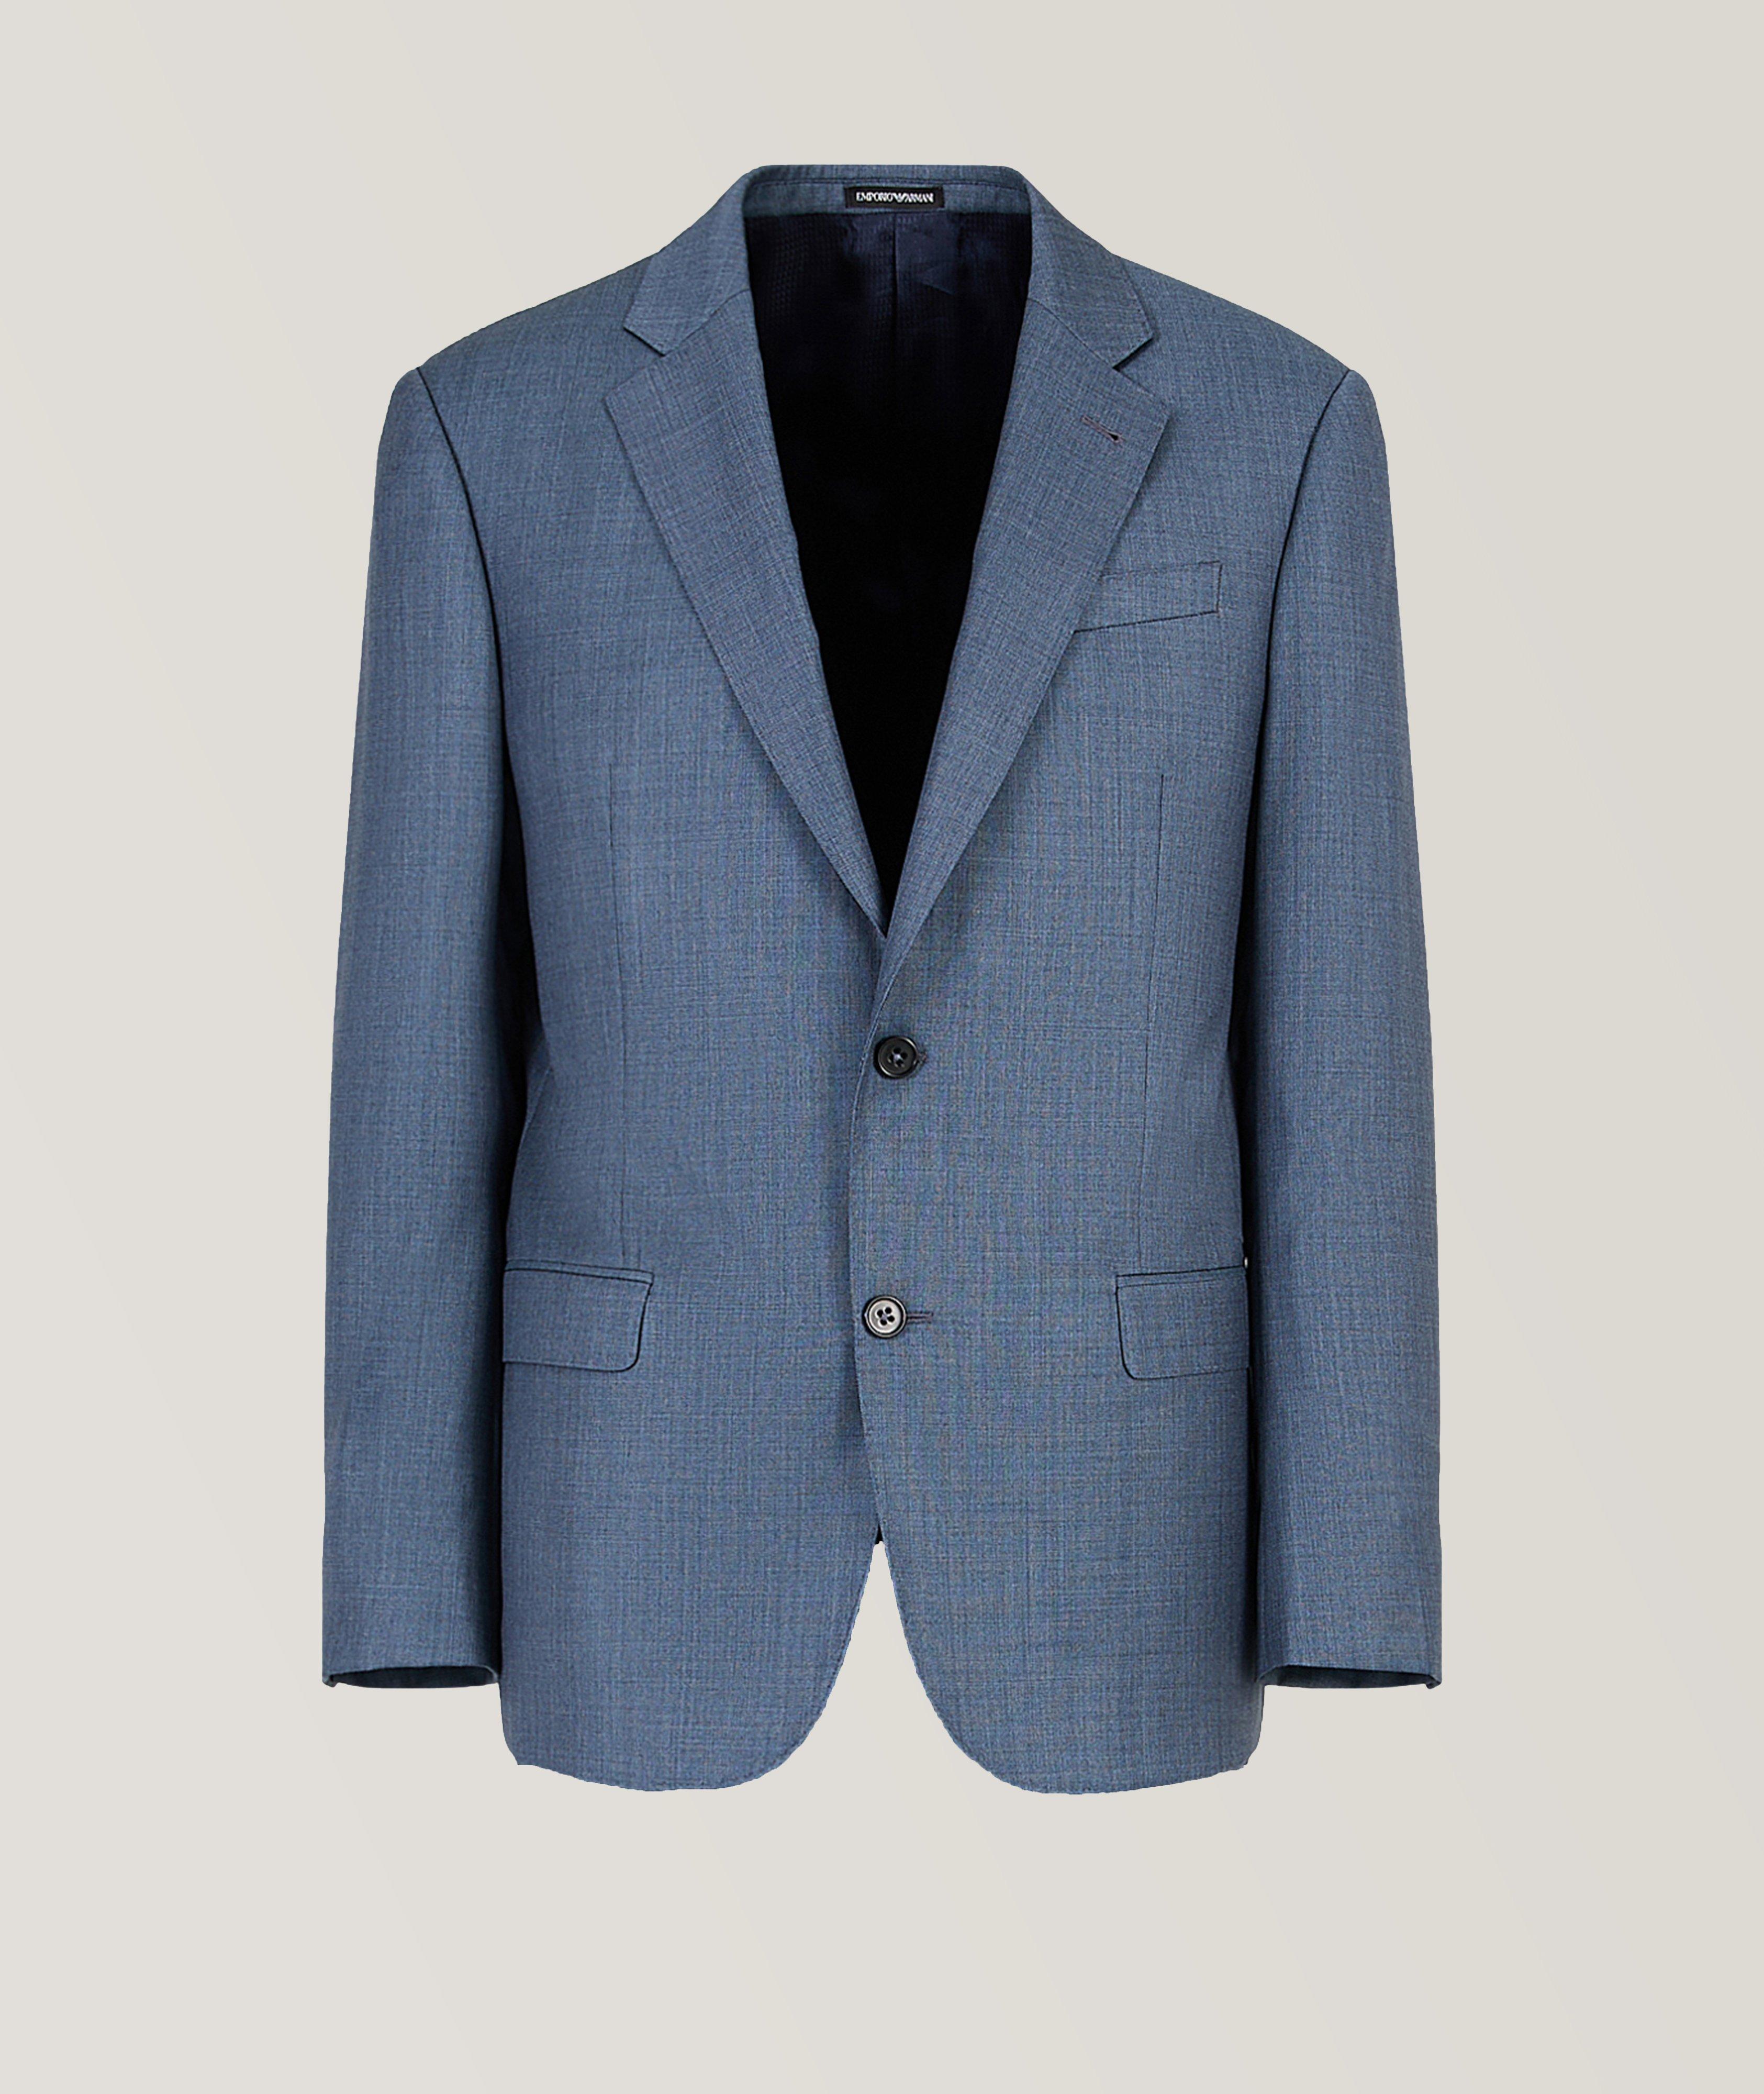 Pick Stitched G-Line Virgin Wool Suit image 0